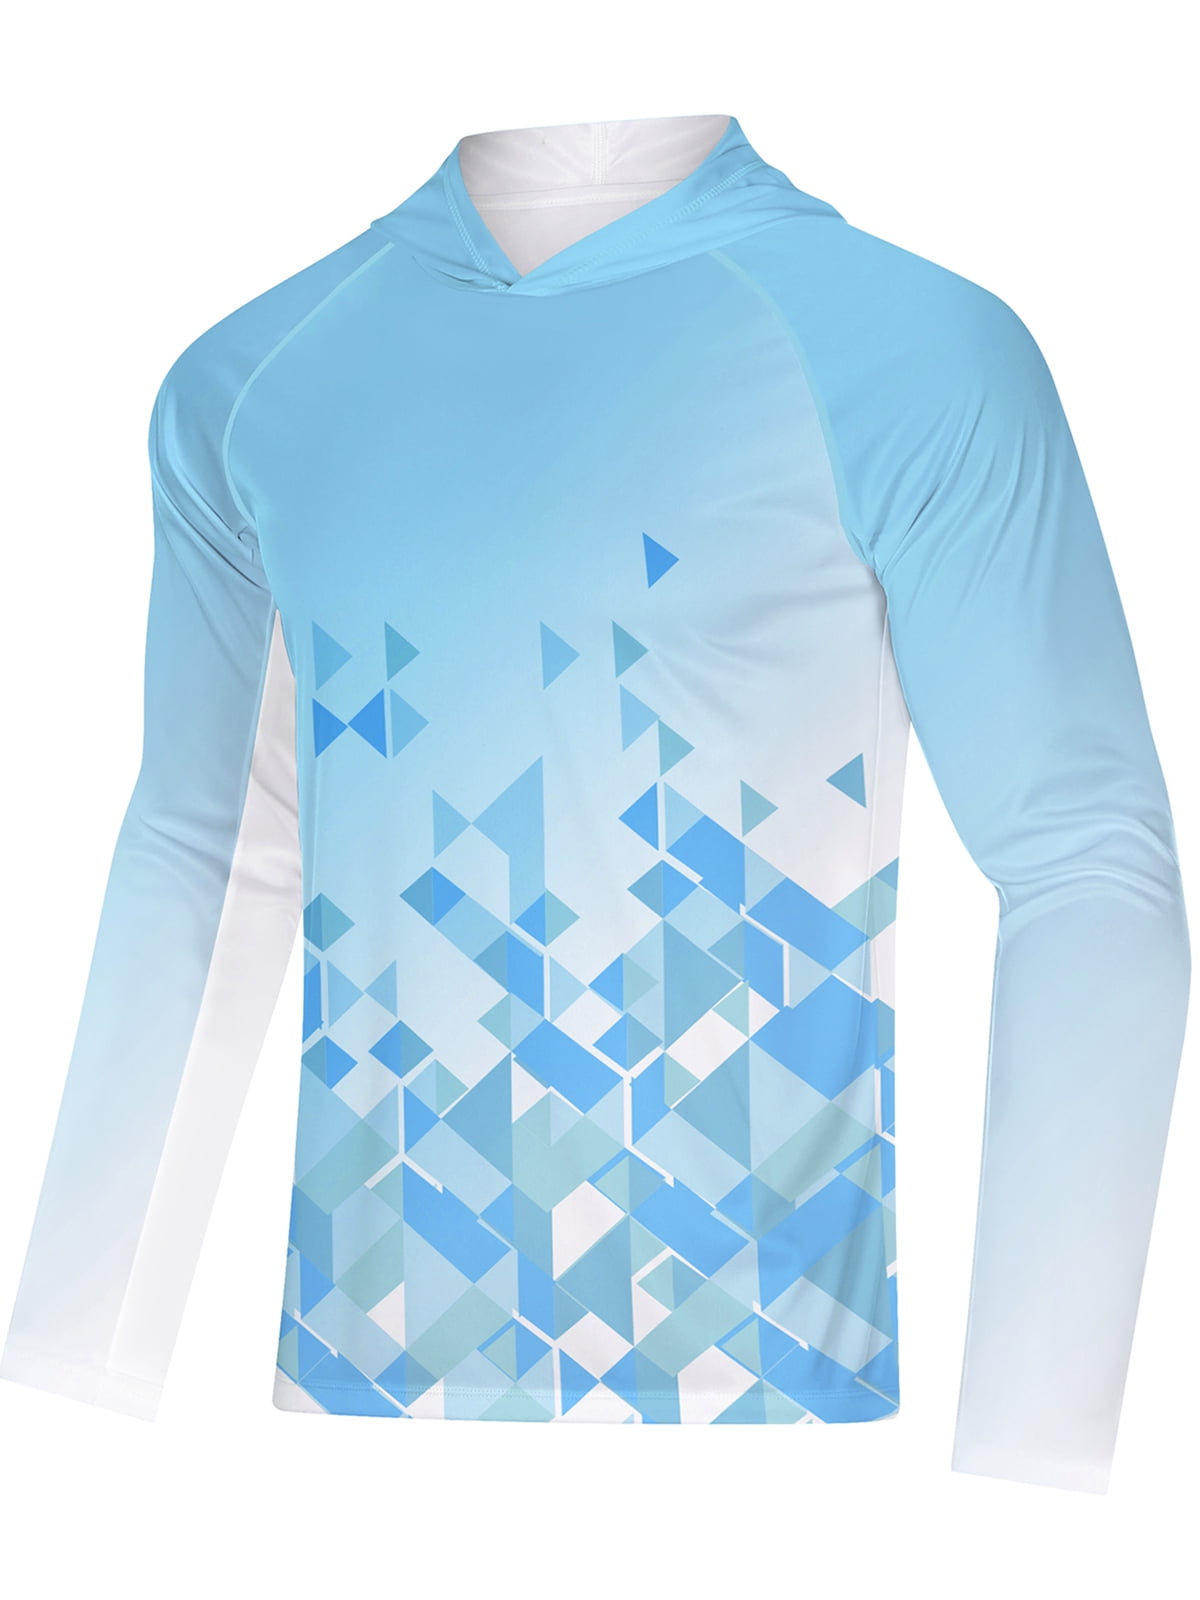 Mens Long Sleeve Shirt Polyester Hoodie Rash Guard for Men Running Hiking  Blue XL 